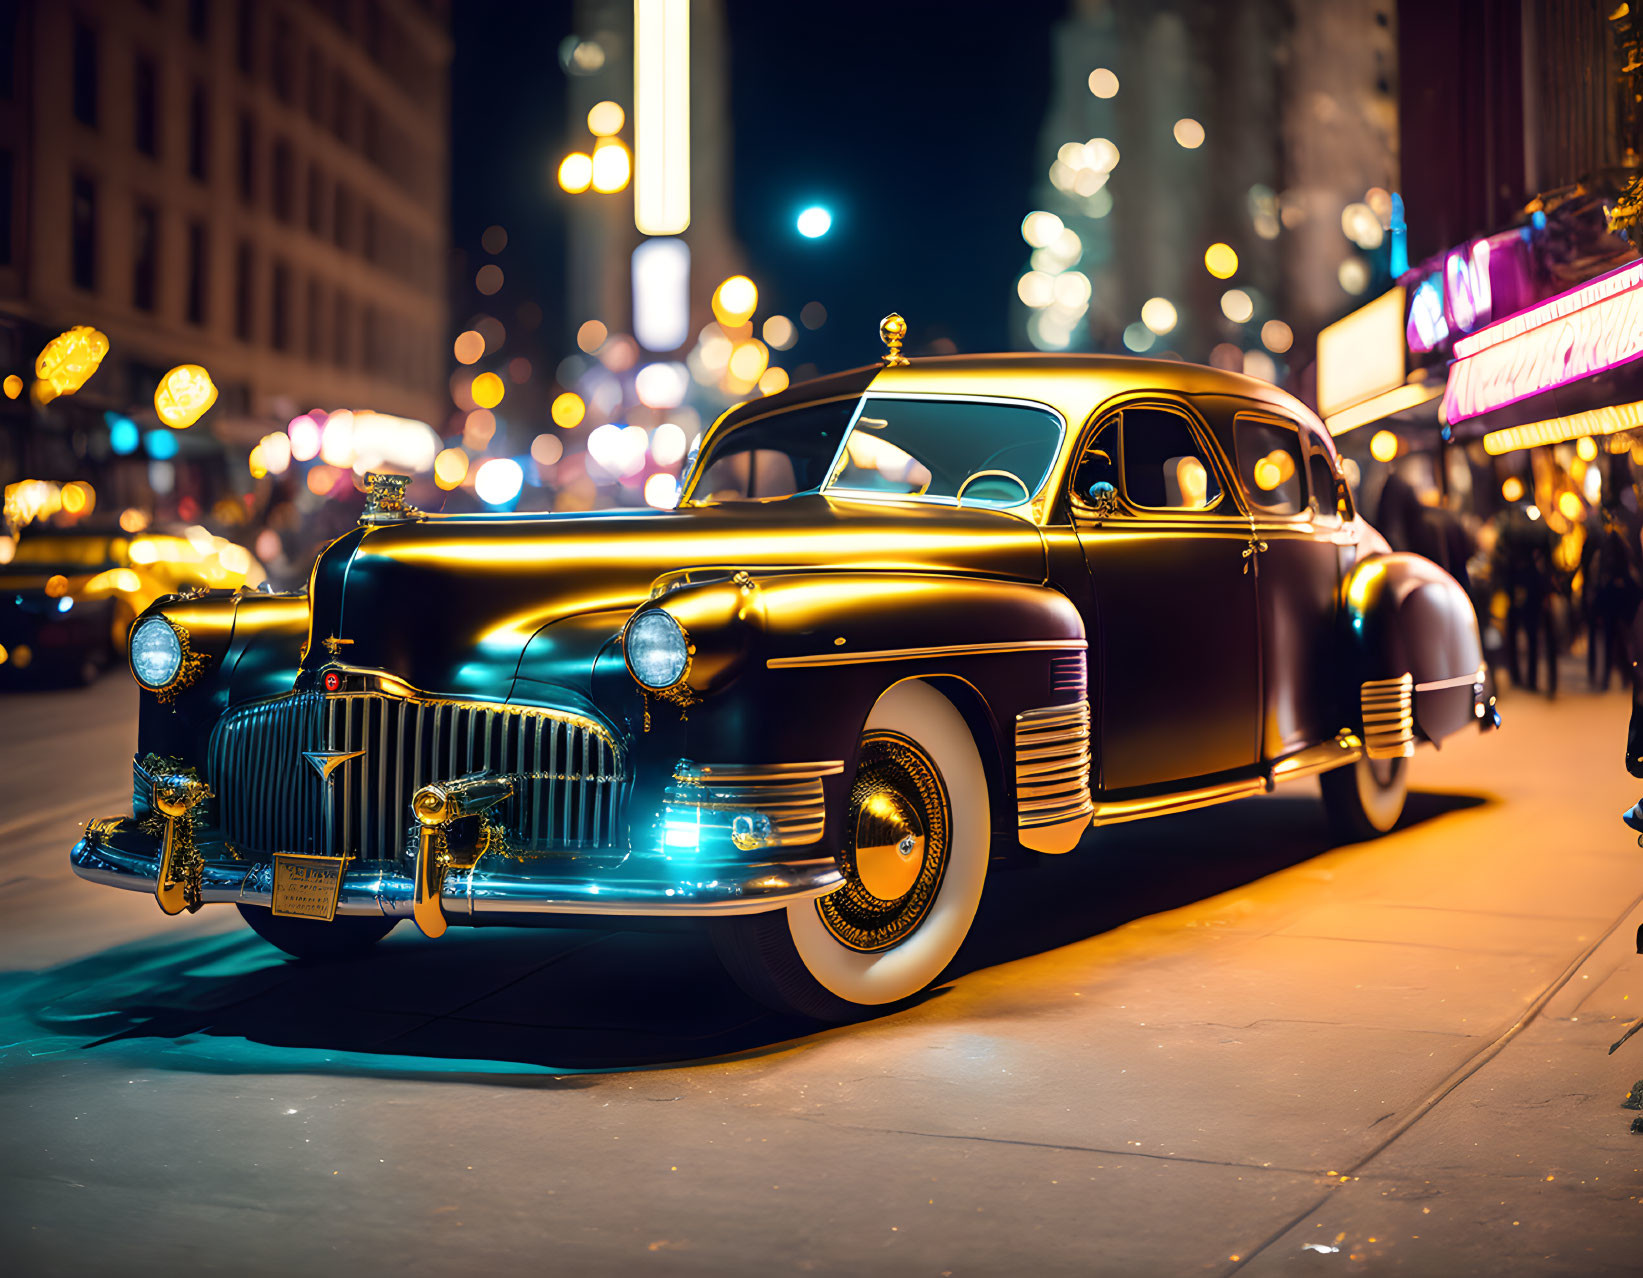 Vintage car parked on city street at night under neon lights